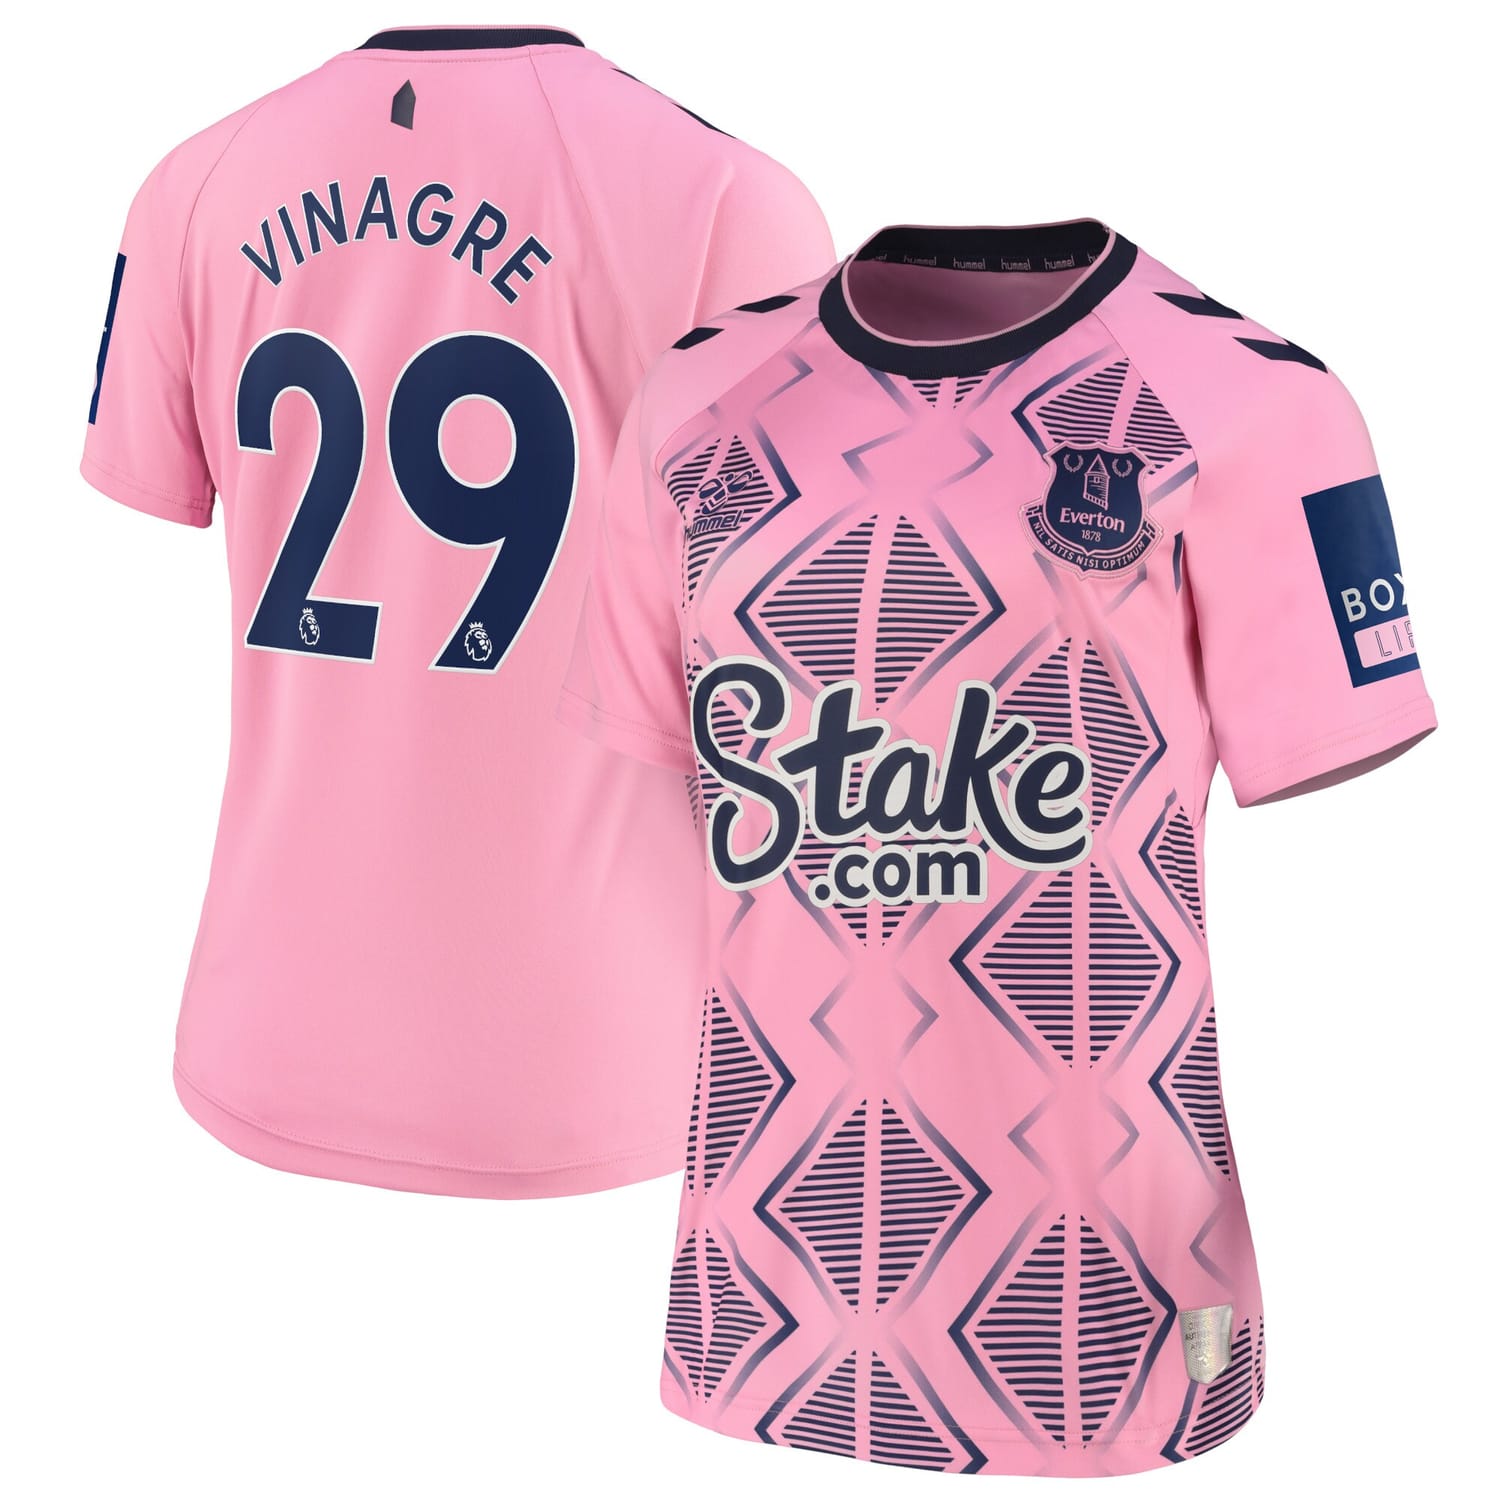 Premier League Everton Away Jersey Shirt 2022-23 player Rúben Vinagre 29 printing for Women